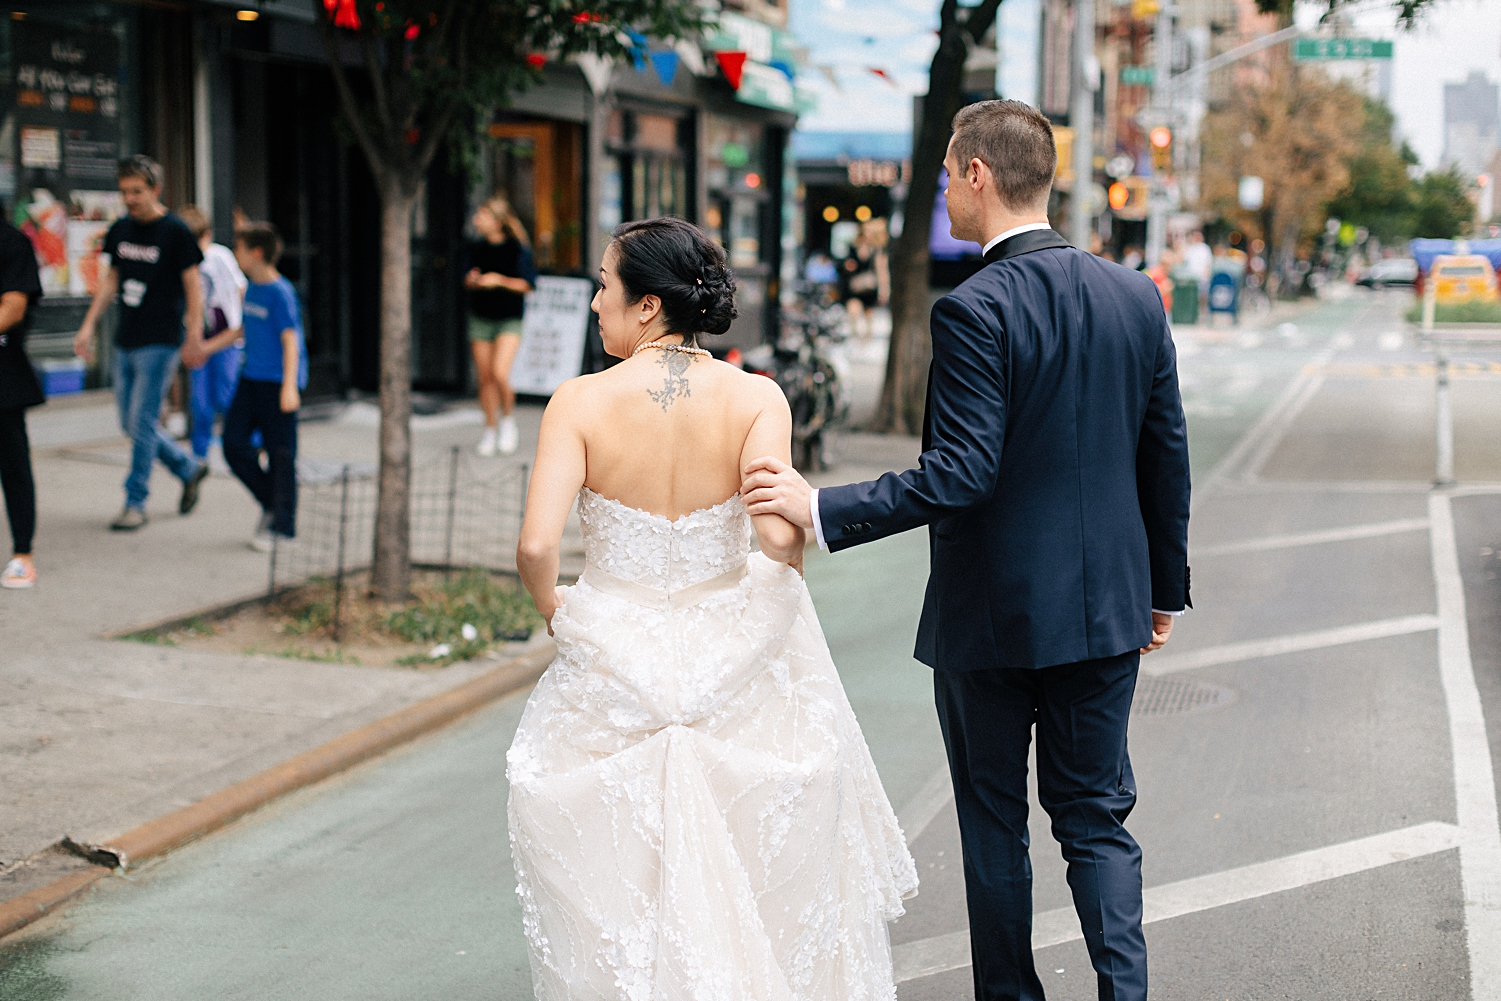 groom in navy suite helping bride down the street in new york city